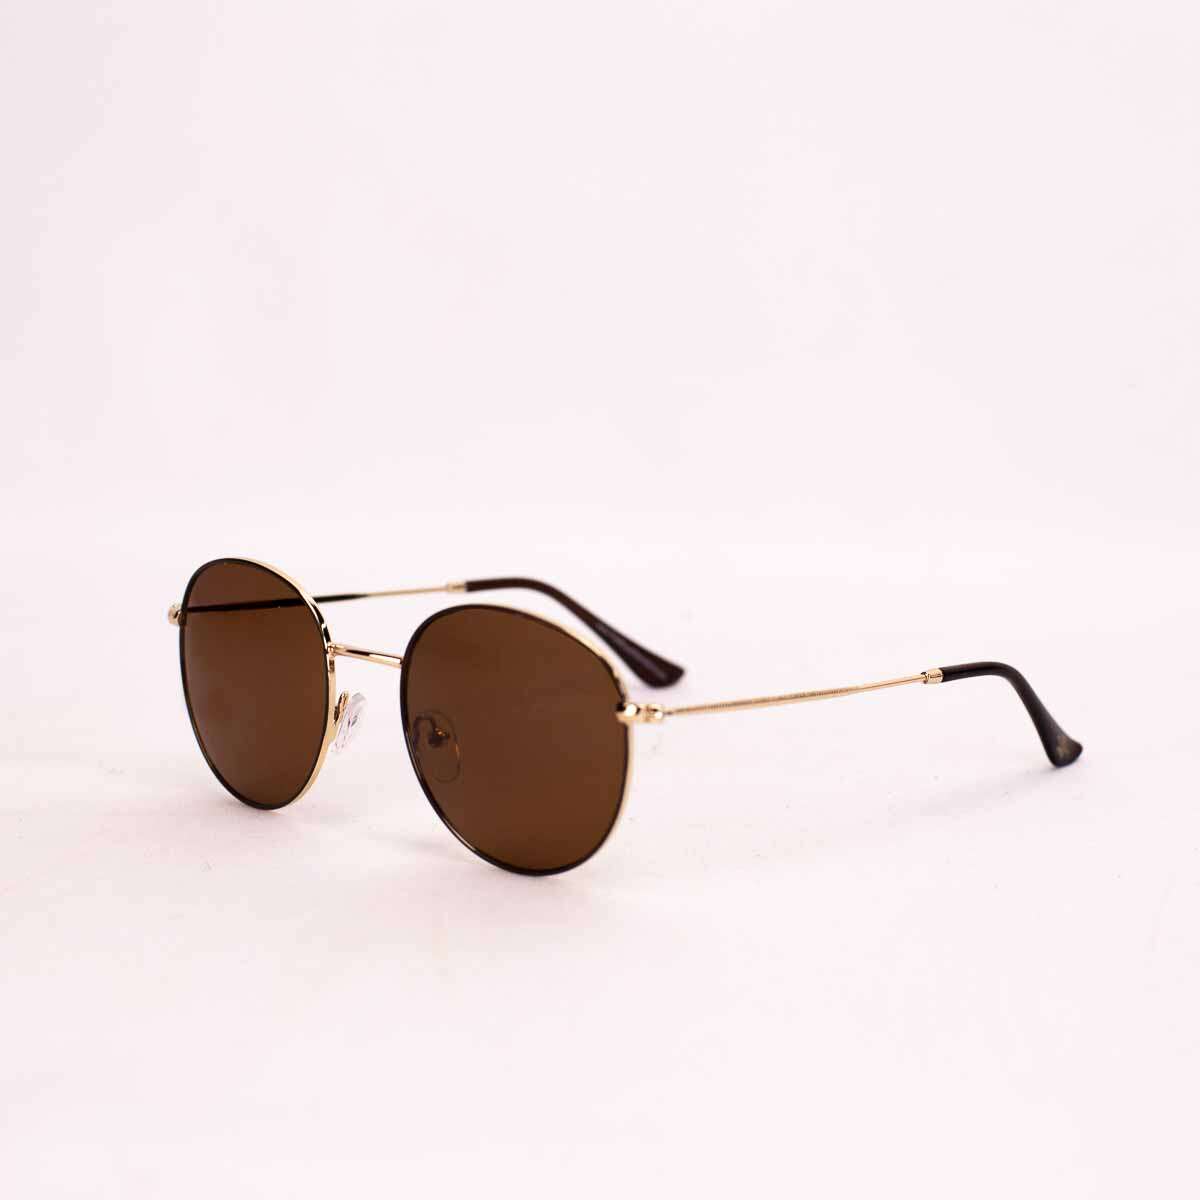 Malina Sunglasses   Gold/Brown   One Size